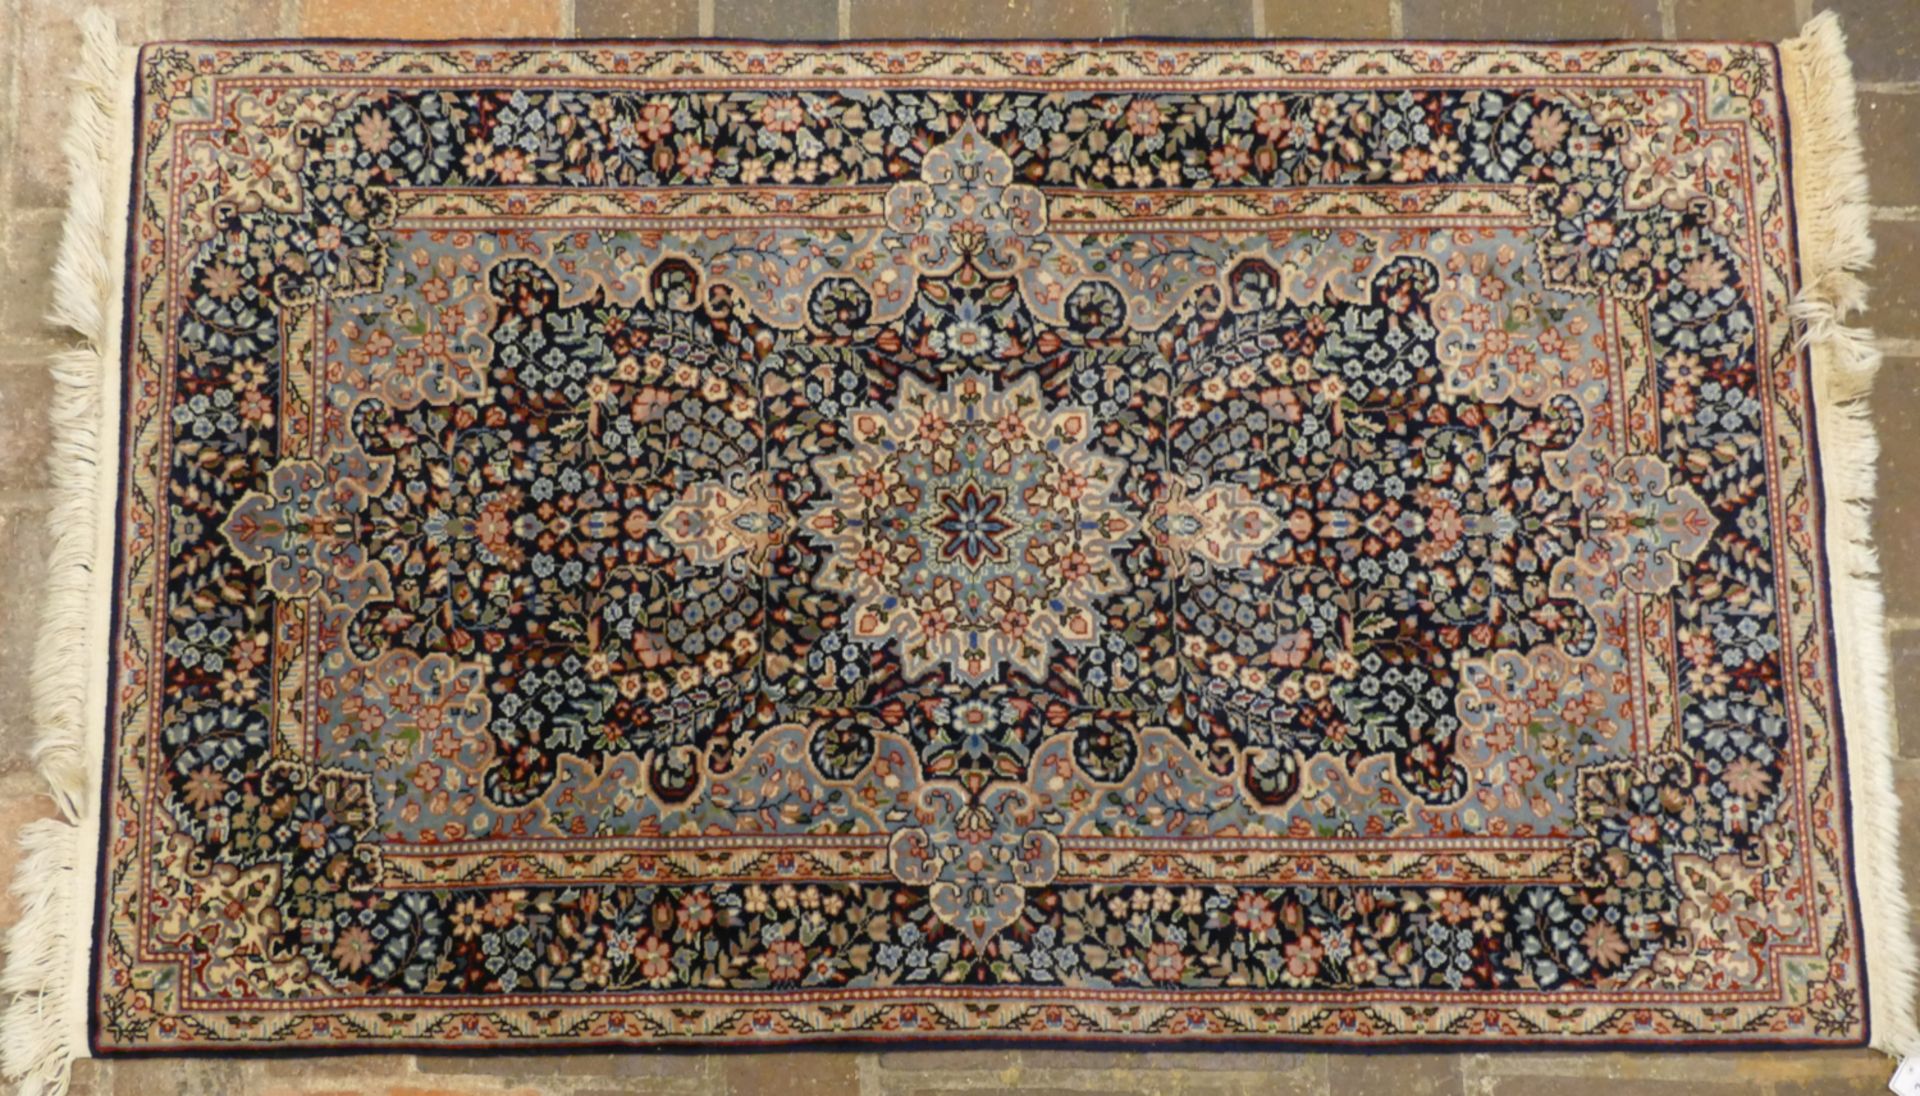 2 Teppiche 20. Jh.: 1x China rücks. bez. "mit persischem Muster" dunkelblaugrundig ca. 154x91cm,